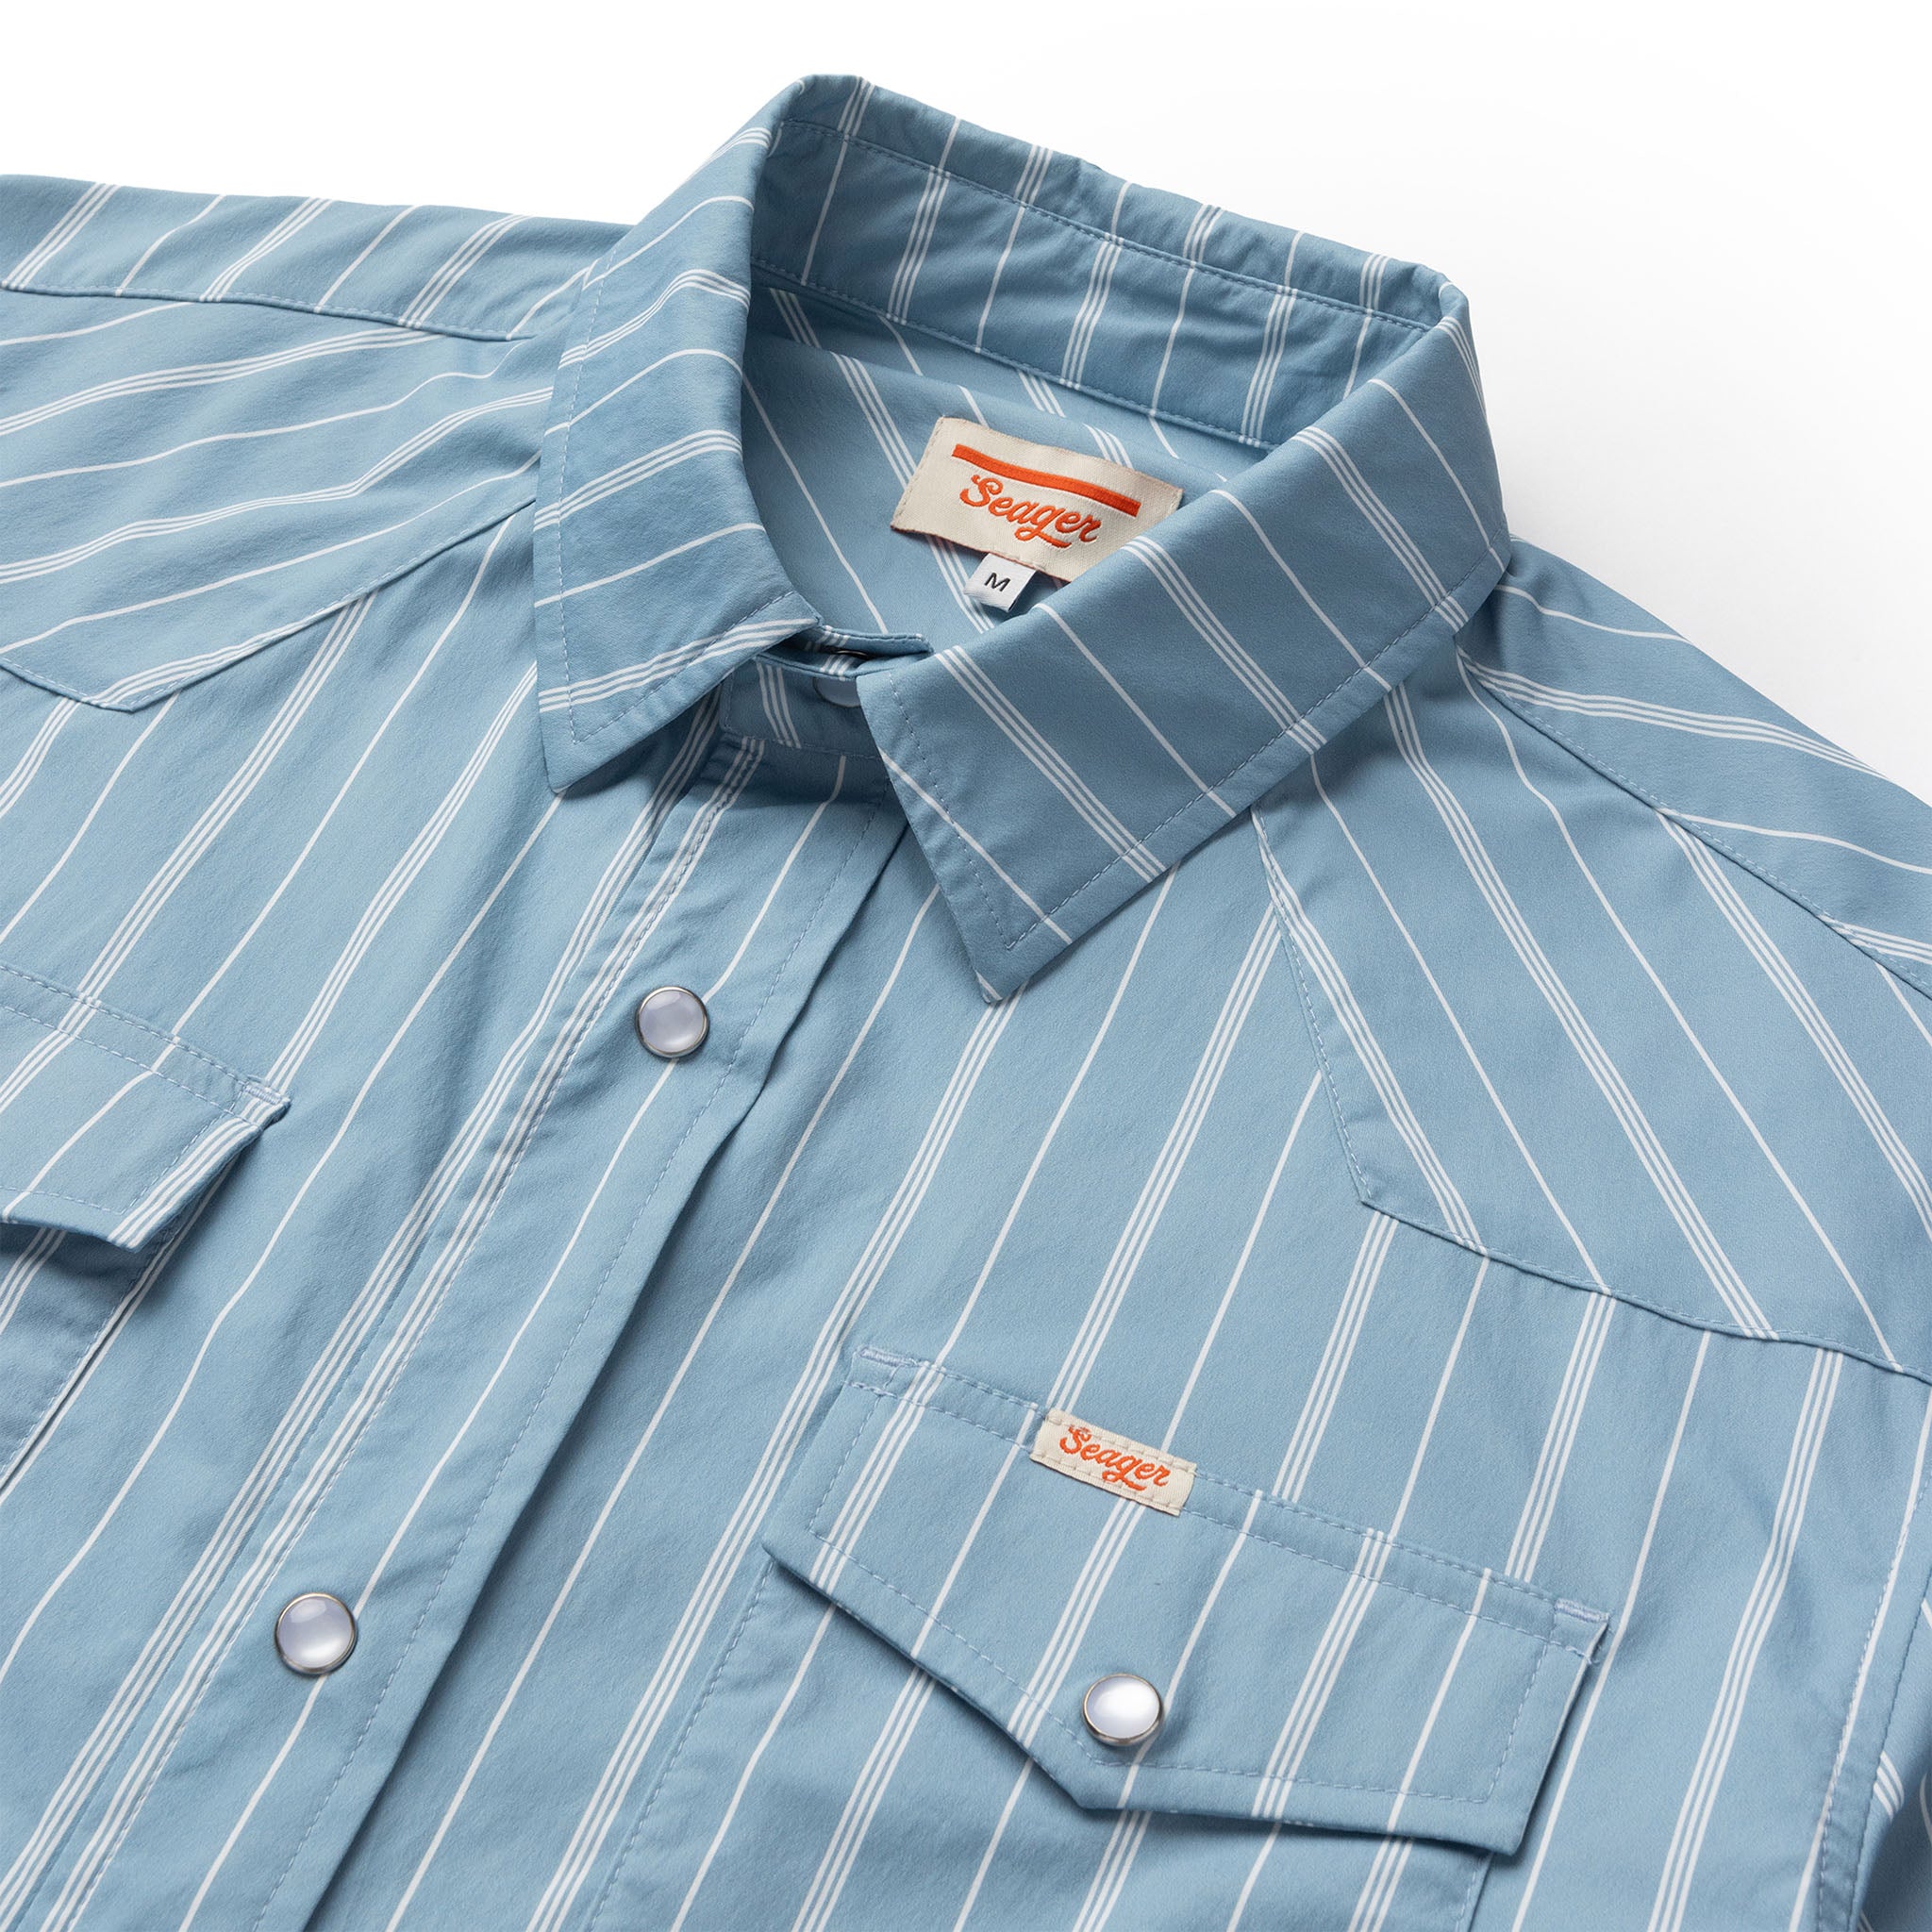 El Ranchero S/S Shirt Slate Blue Stripe